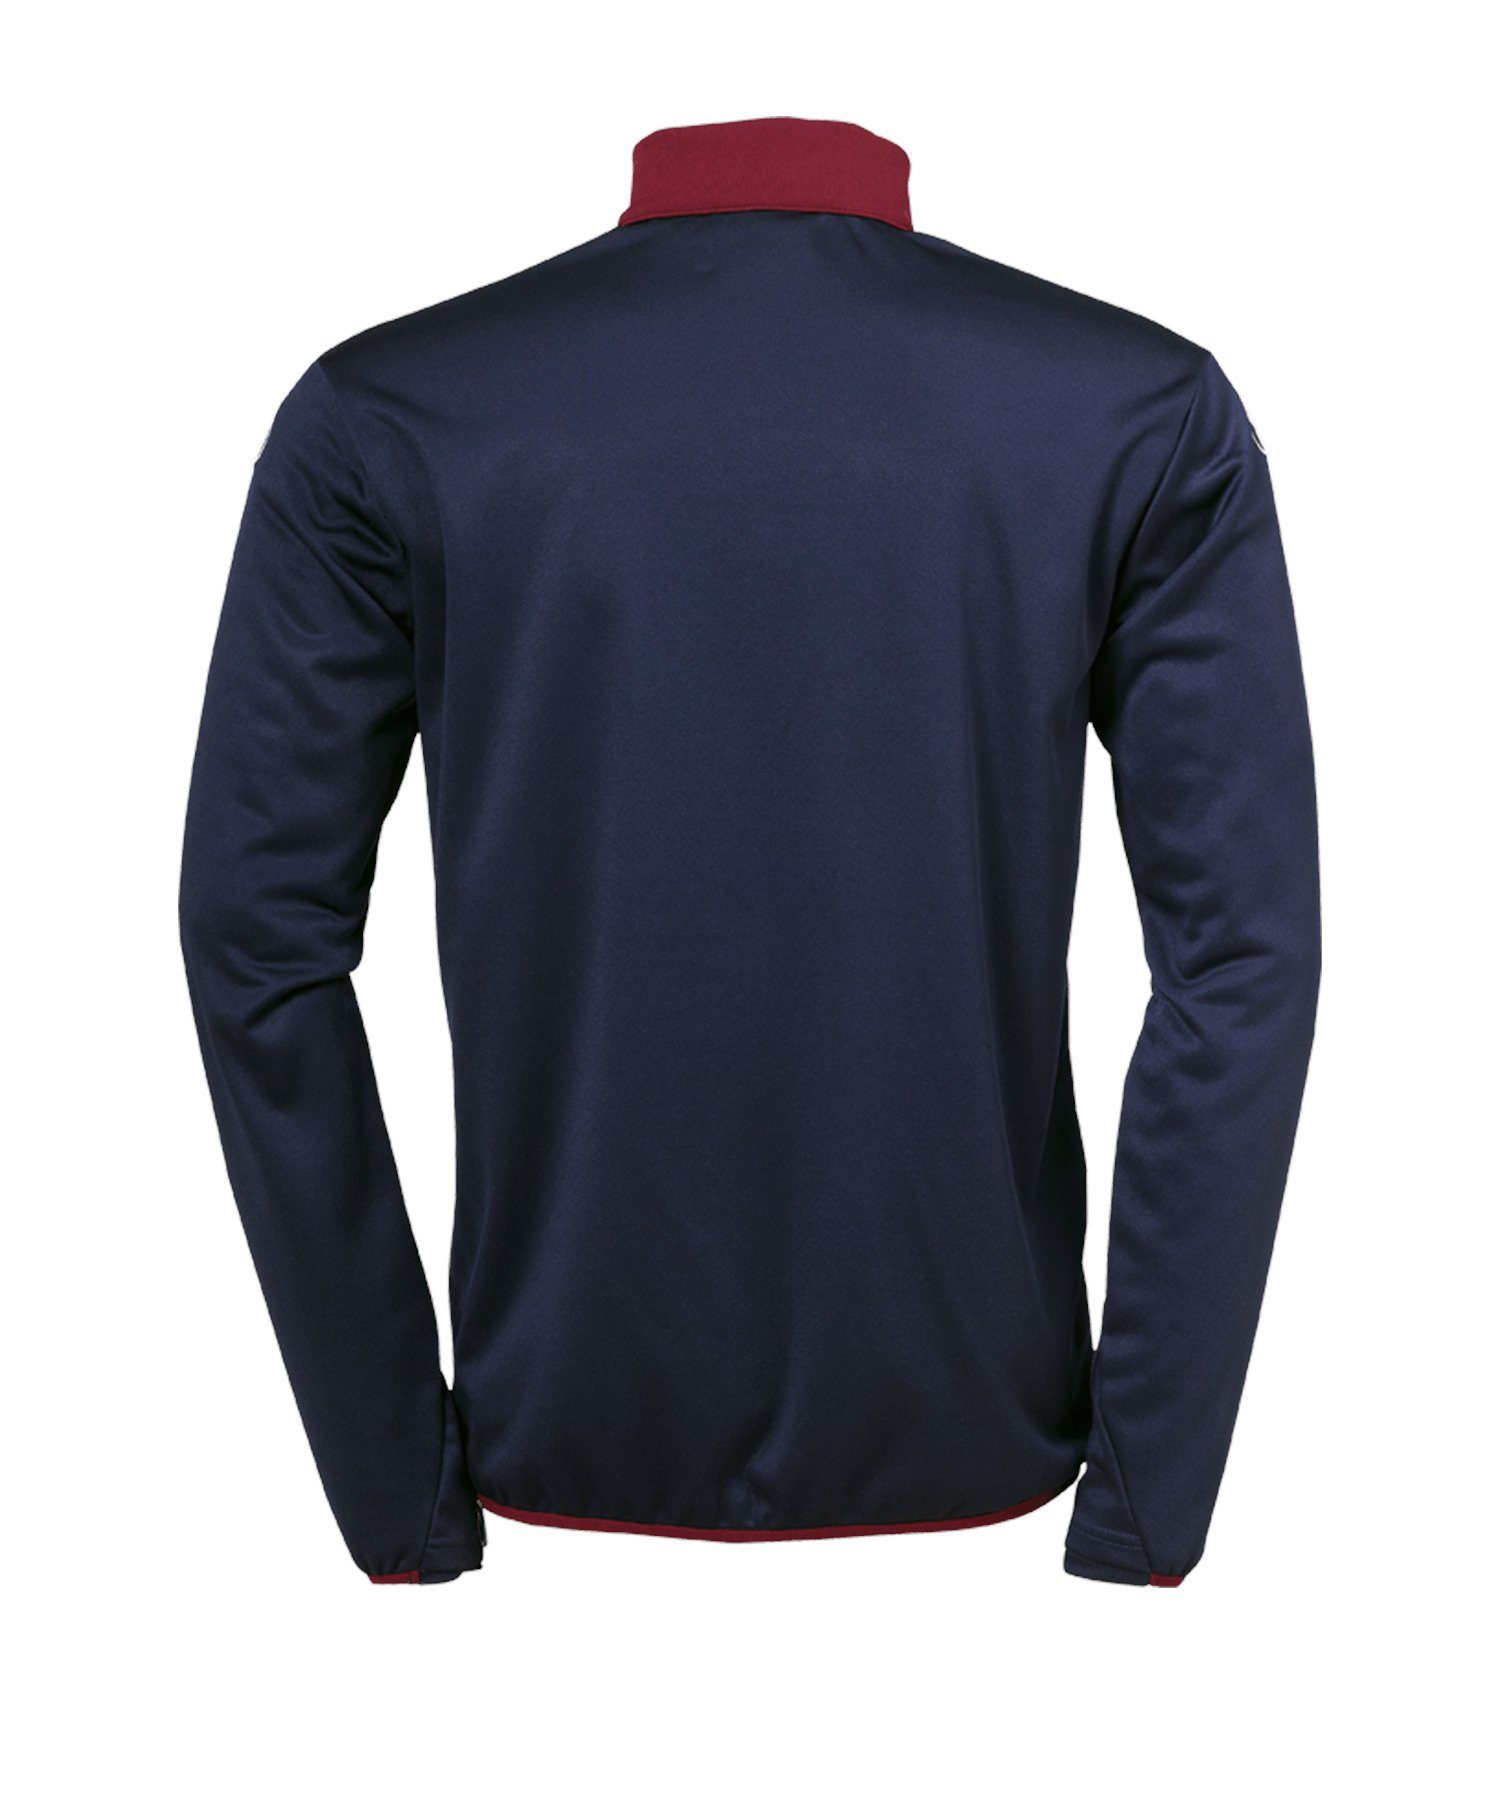 Sweatshirt blaurotgelb 23 uhlsport Offense Ziptop